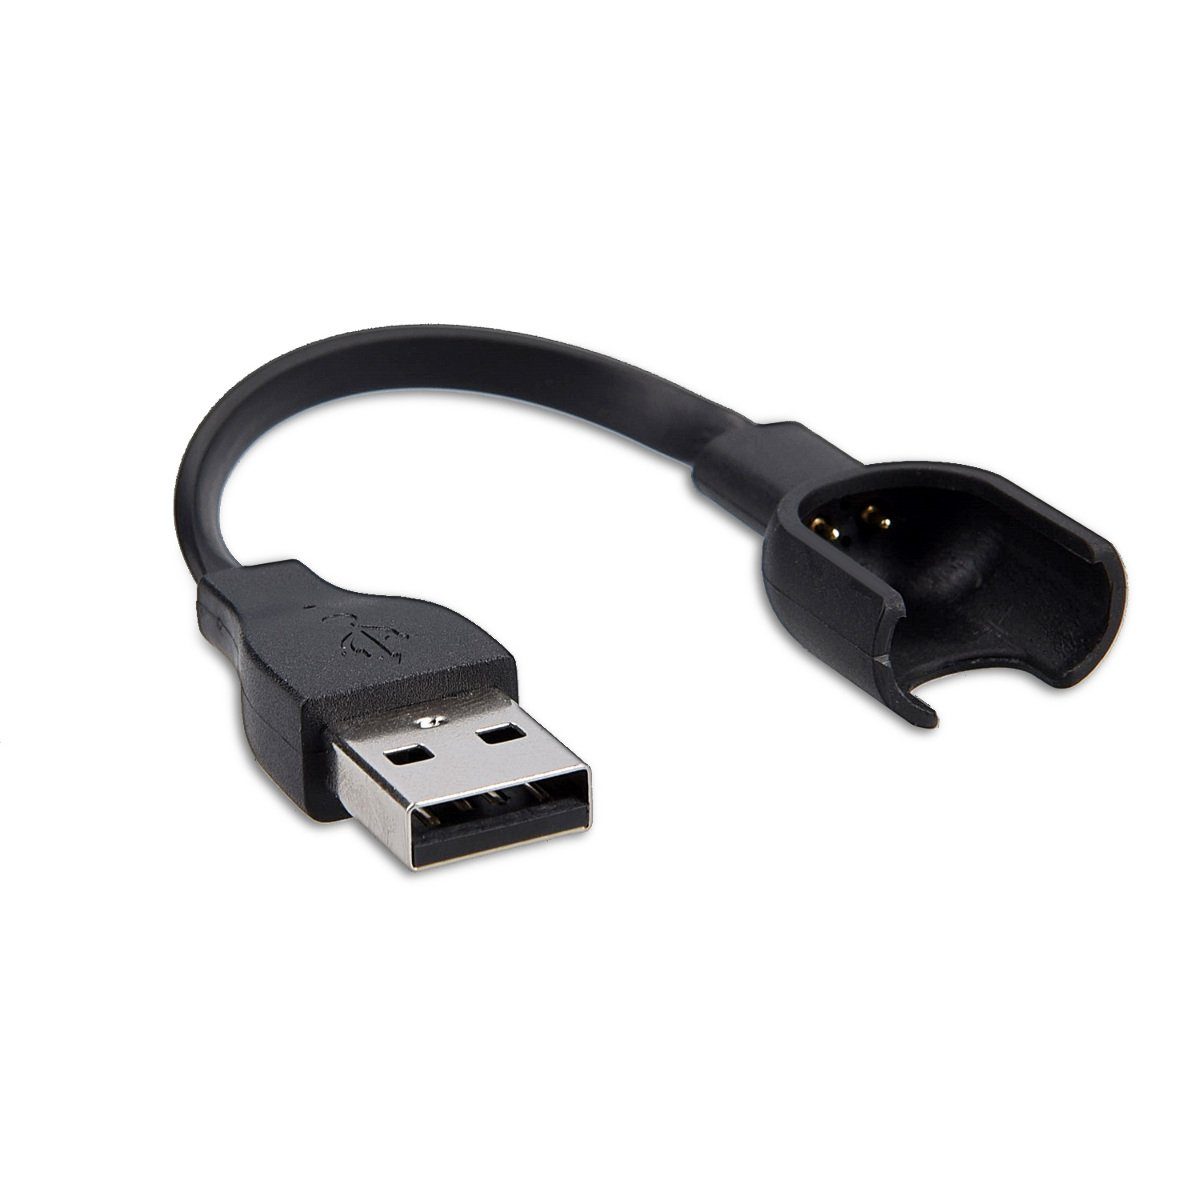 Ladekabel für Xiaomi Mi Band 3 Fitness Tracker Band Ladegerät USB 